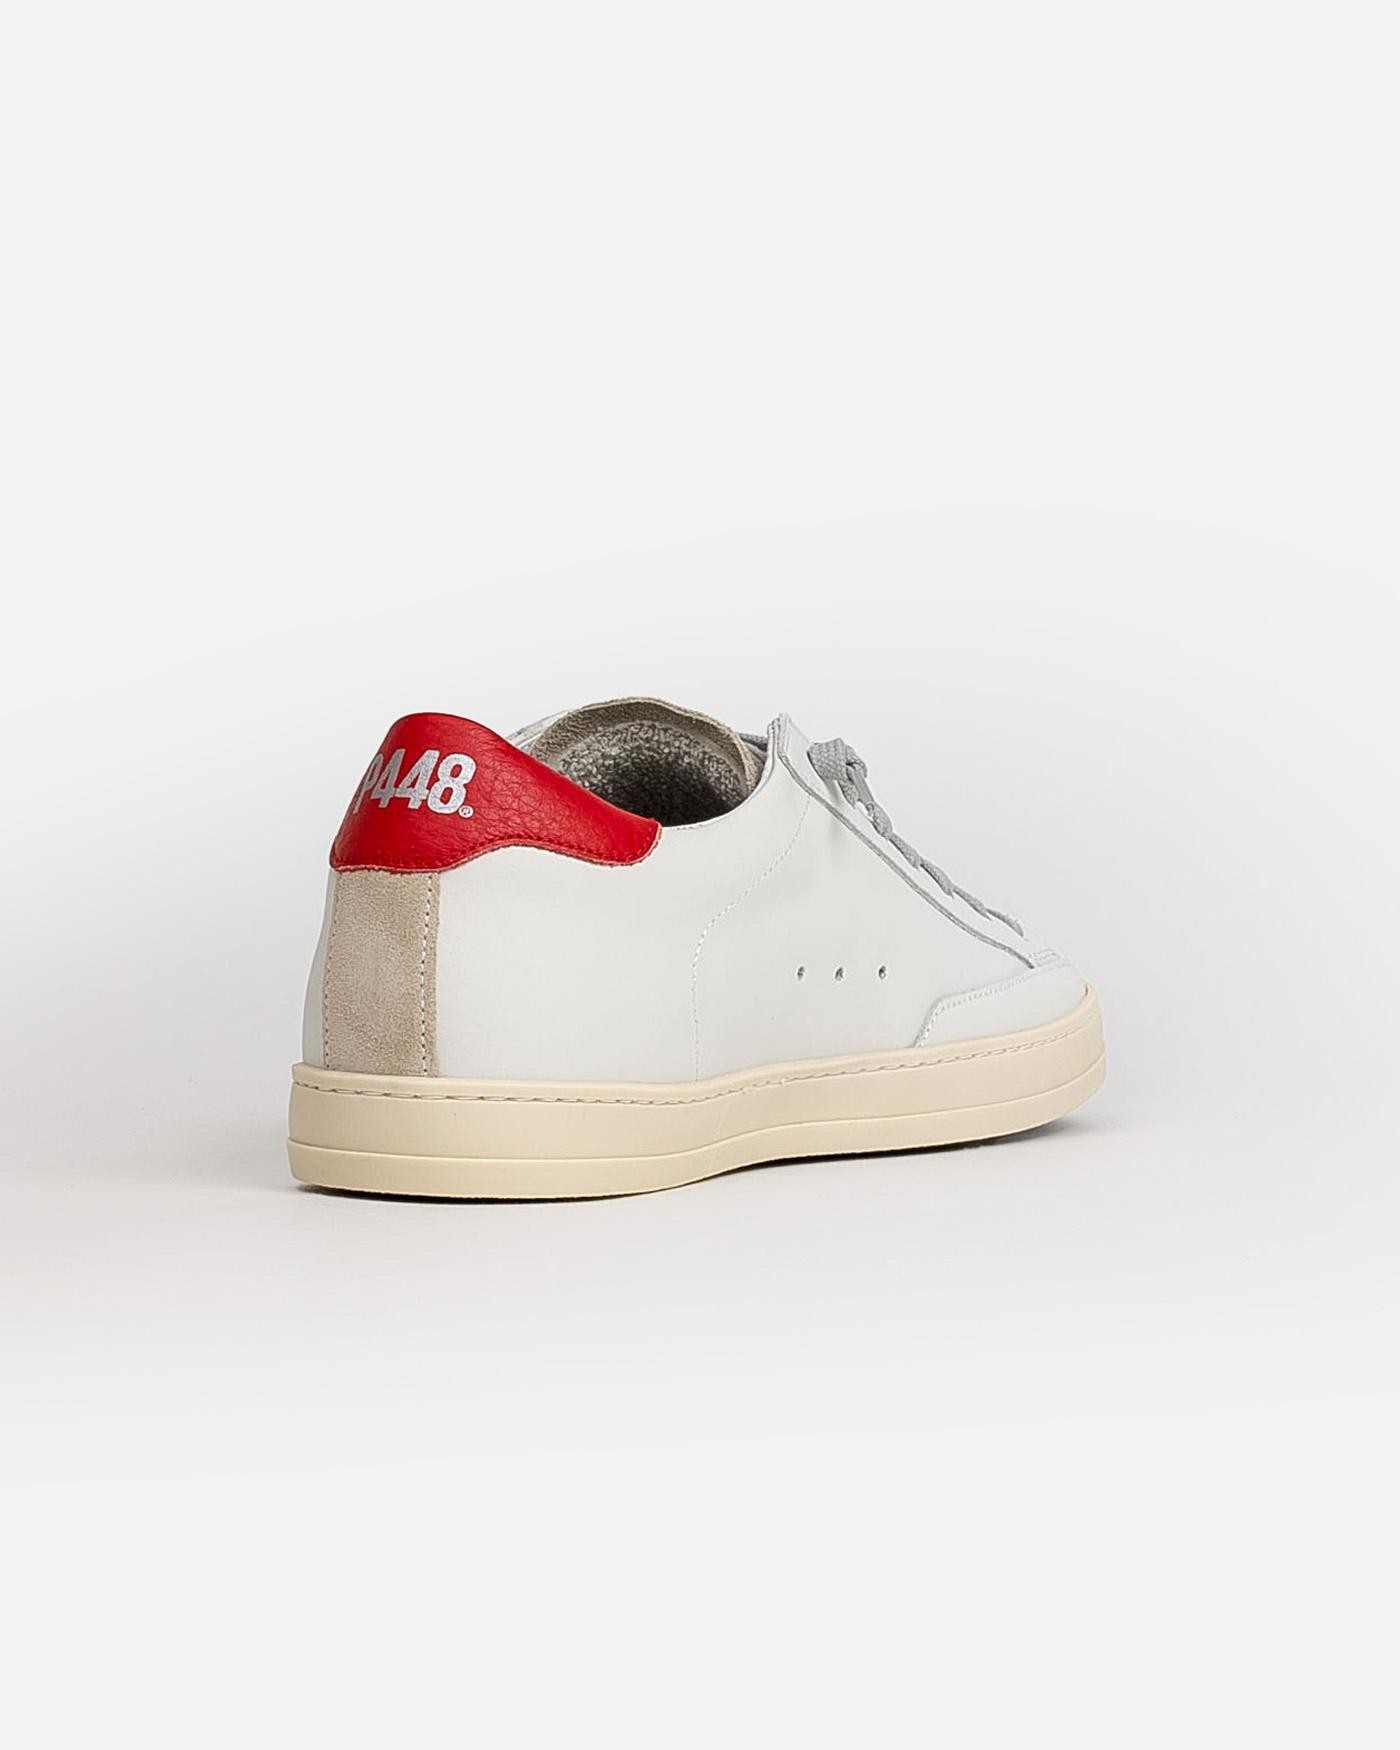 p448-zapatillas-john-red-sneakers-white-blancas-2